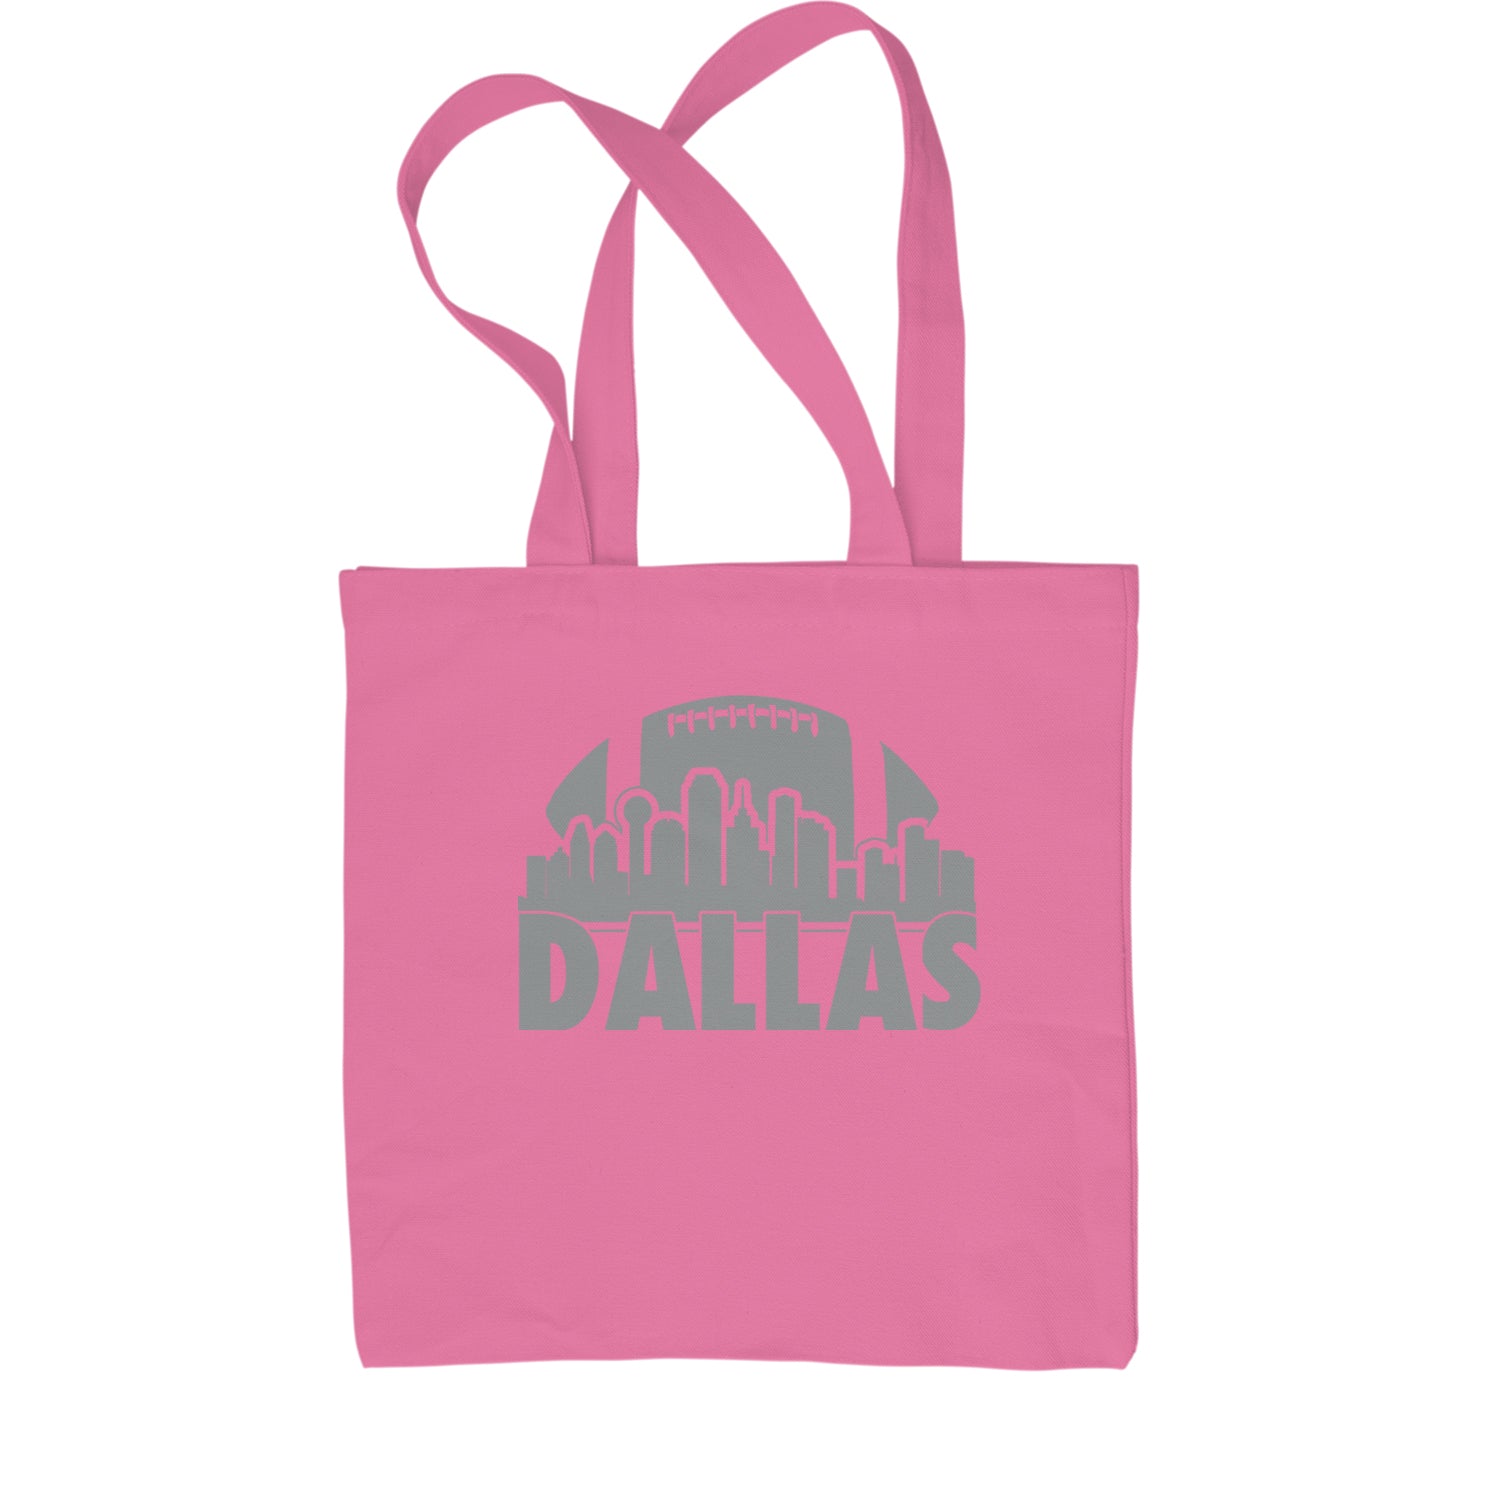 Dallas Texas Skyline Shopping Tote Bag dallas, Texas by Expression Tees